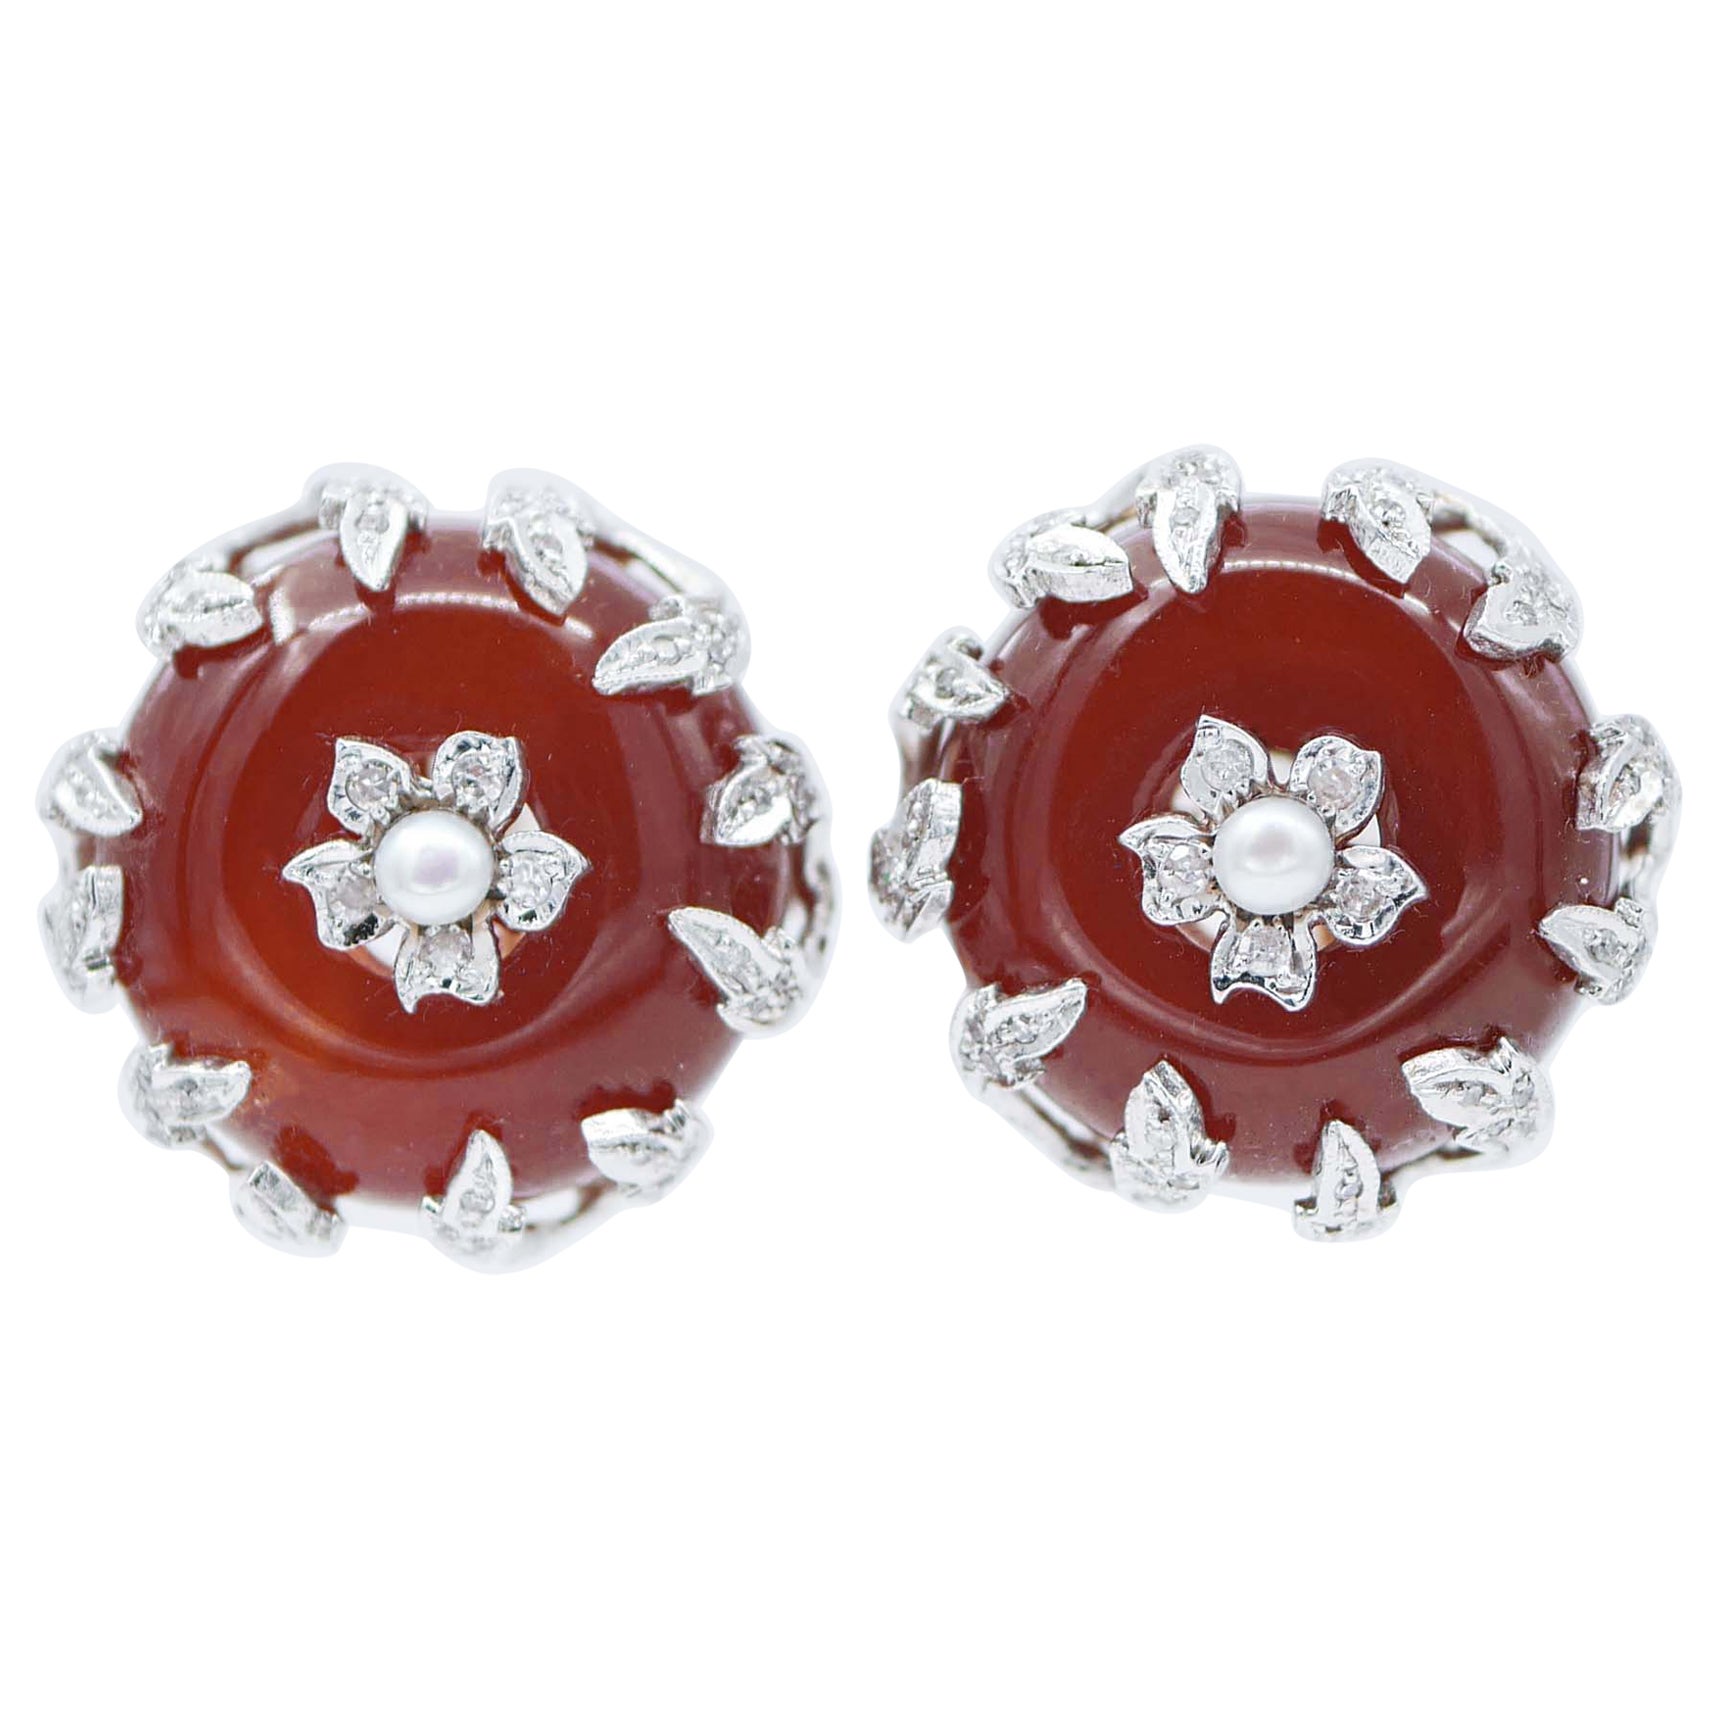 Carnelian, Diamonds, Pearls, 14 Karat White and Rose Gold Earrings For Sale